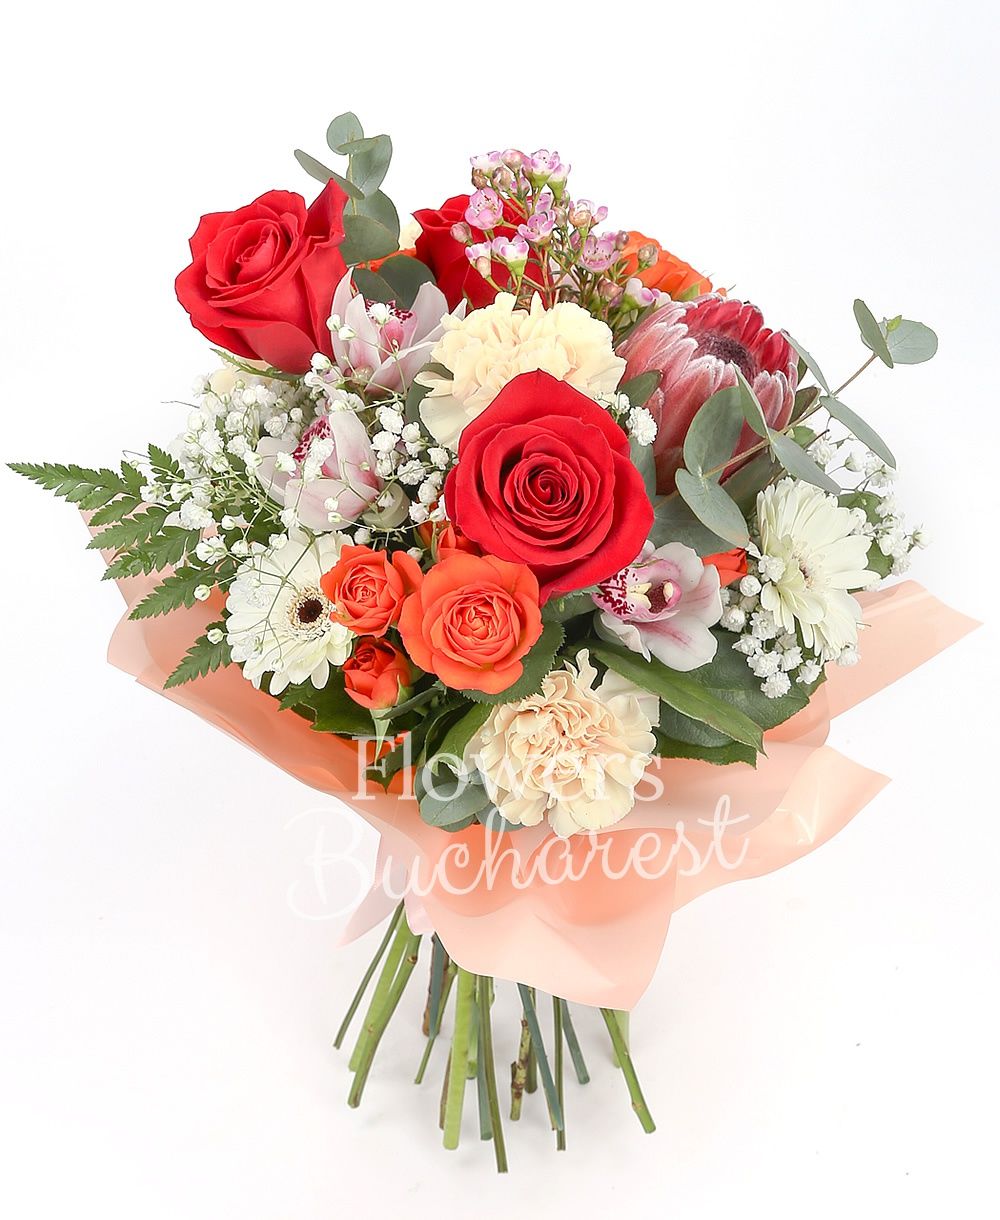 3 red roses, 3 orange miniroses, 1 proteea, 2 white gerbera, 2 cream carnations, white cymbidium, greenery